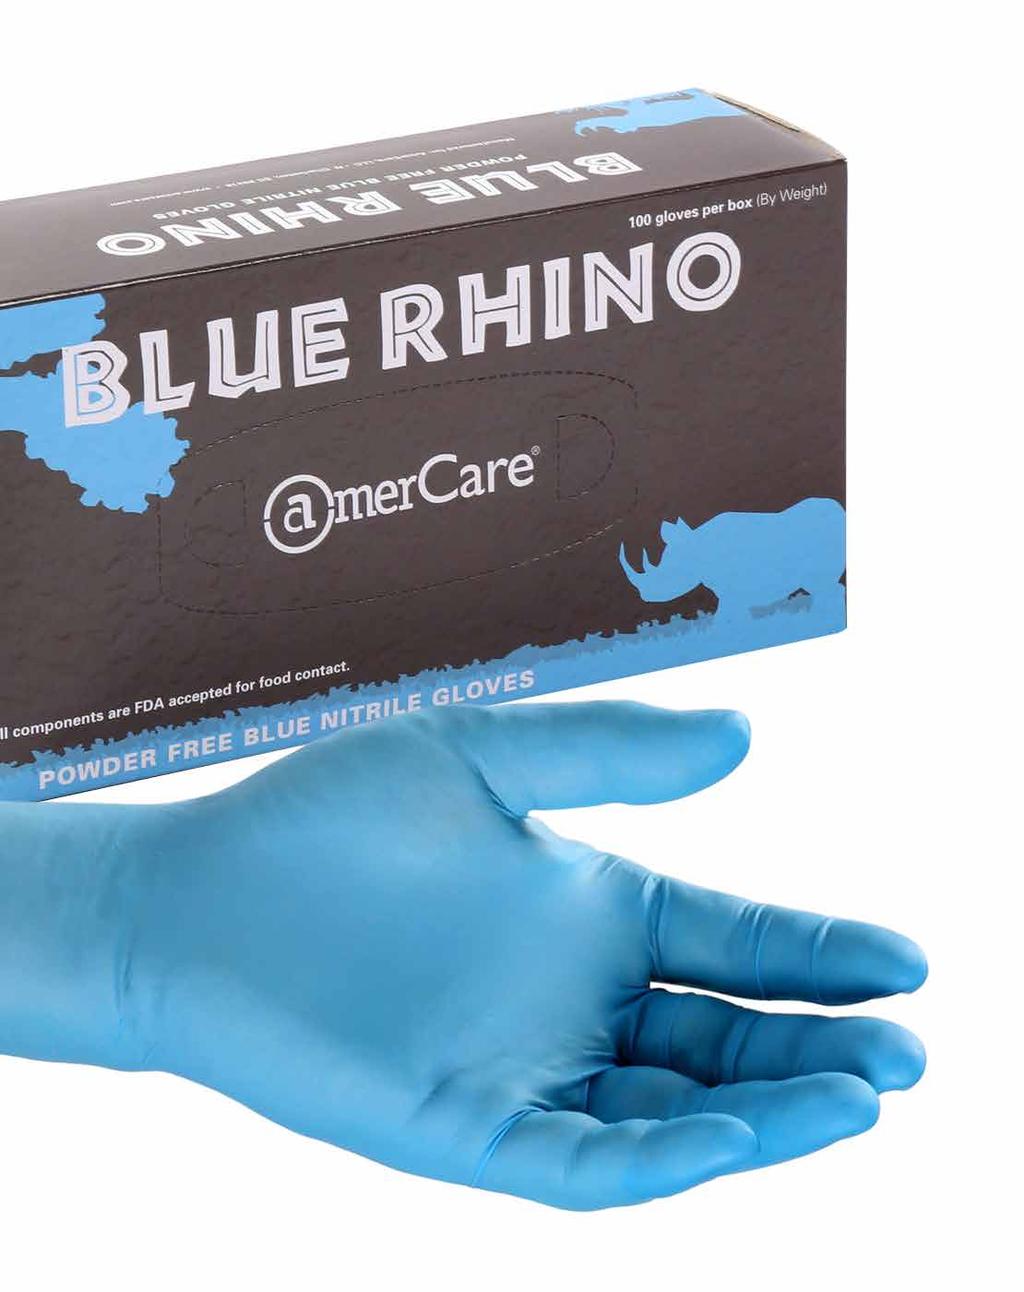 Control, MPN: 6099 $100.90 Blue Rhino Powder Free Nitrile Gloves Sizes: S - XXL, 1,000 Gloves per Case, 900 Gloves per Case for the XX-Large, Average Thickness: 6. Control, MPN: 4099 $95.